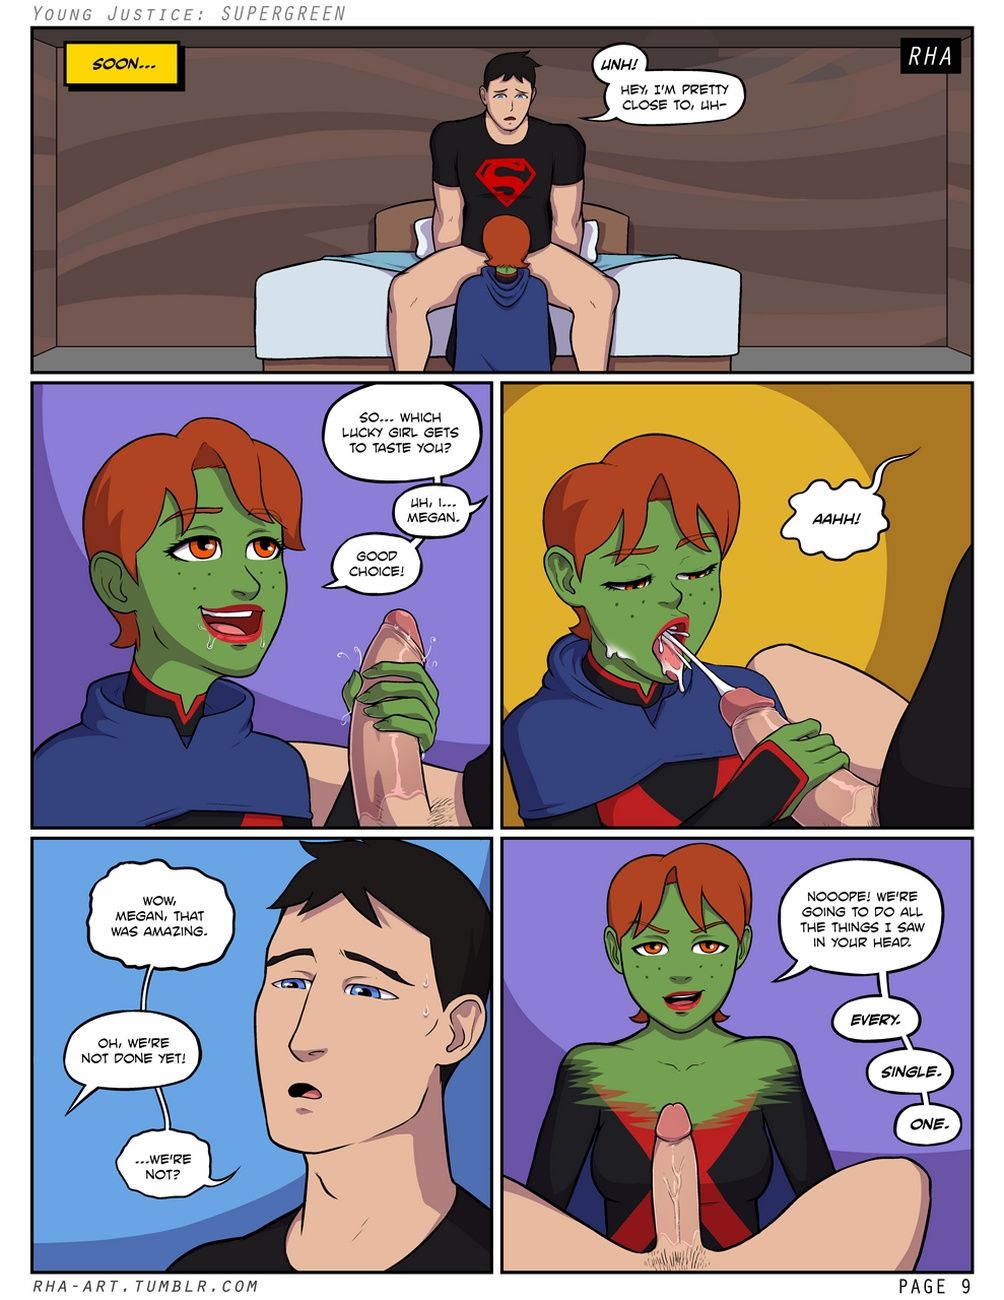 jovem justiça supergreen page 1